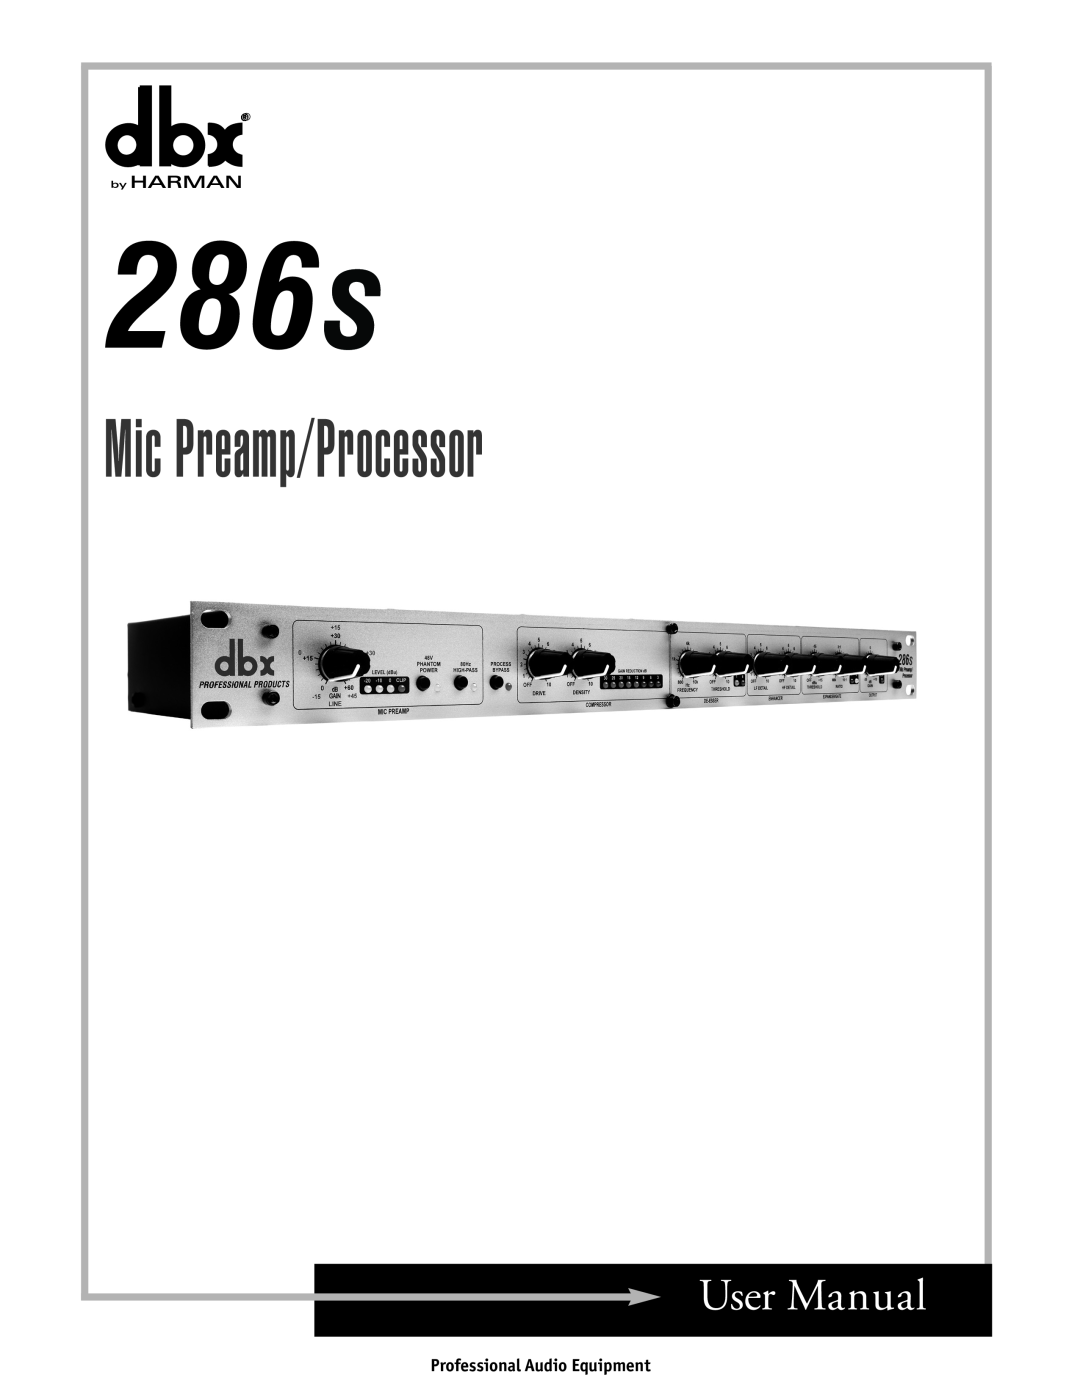 Harman 286 user manual Mic Preamp/Processor, Professional Audio Equipment 